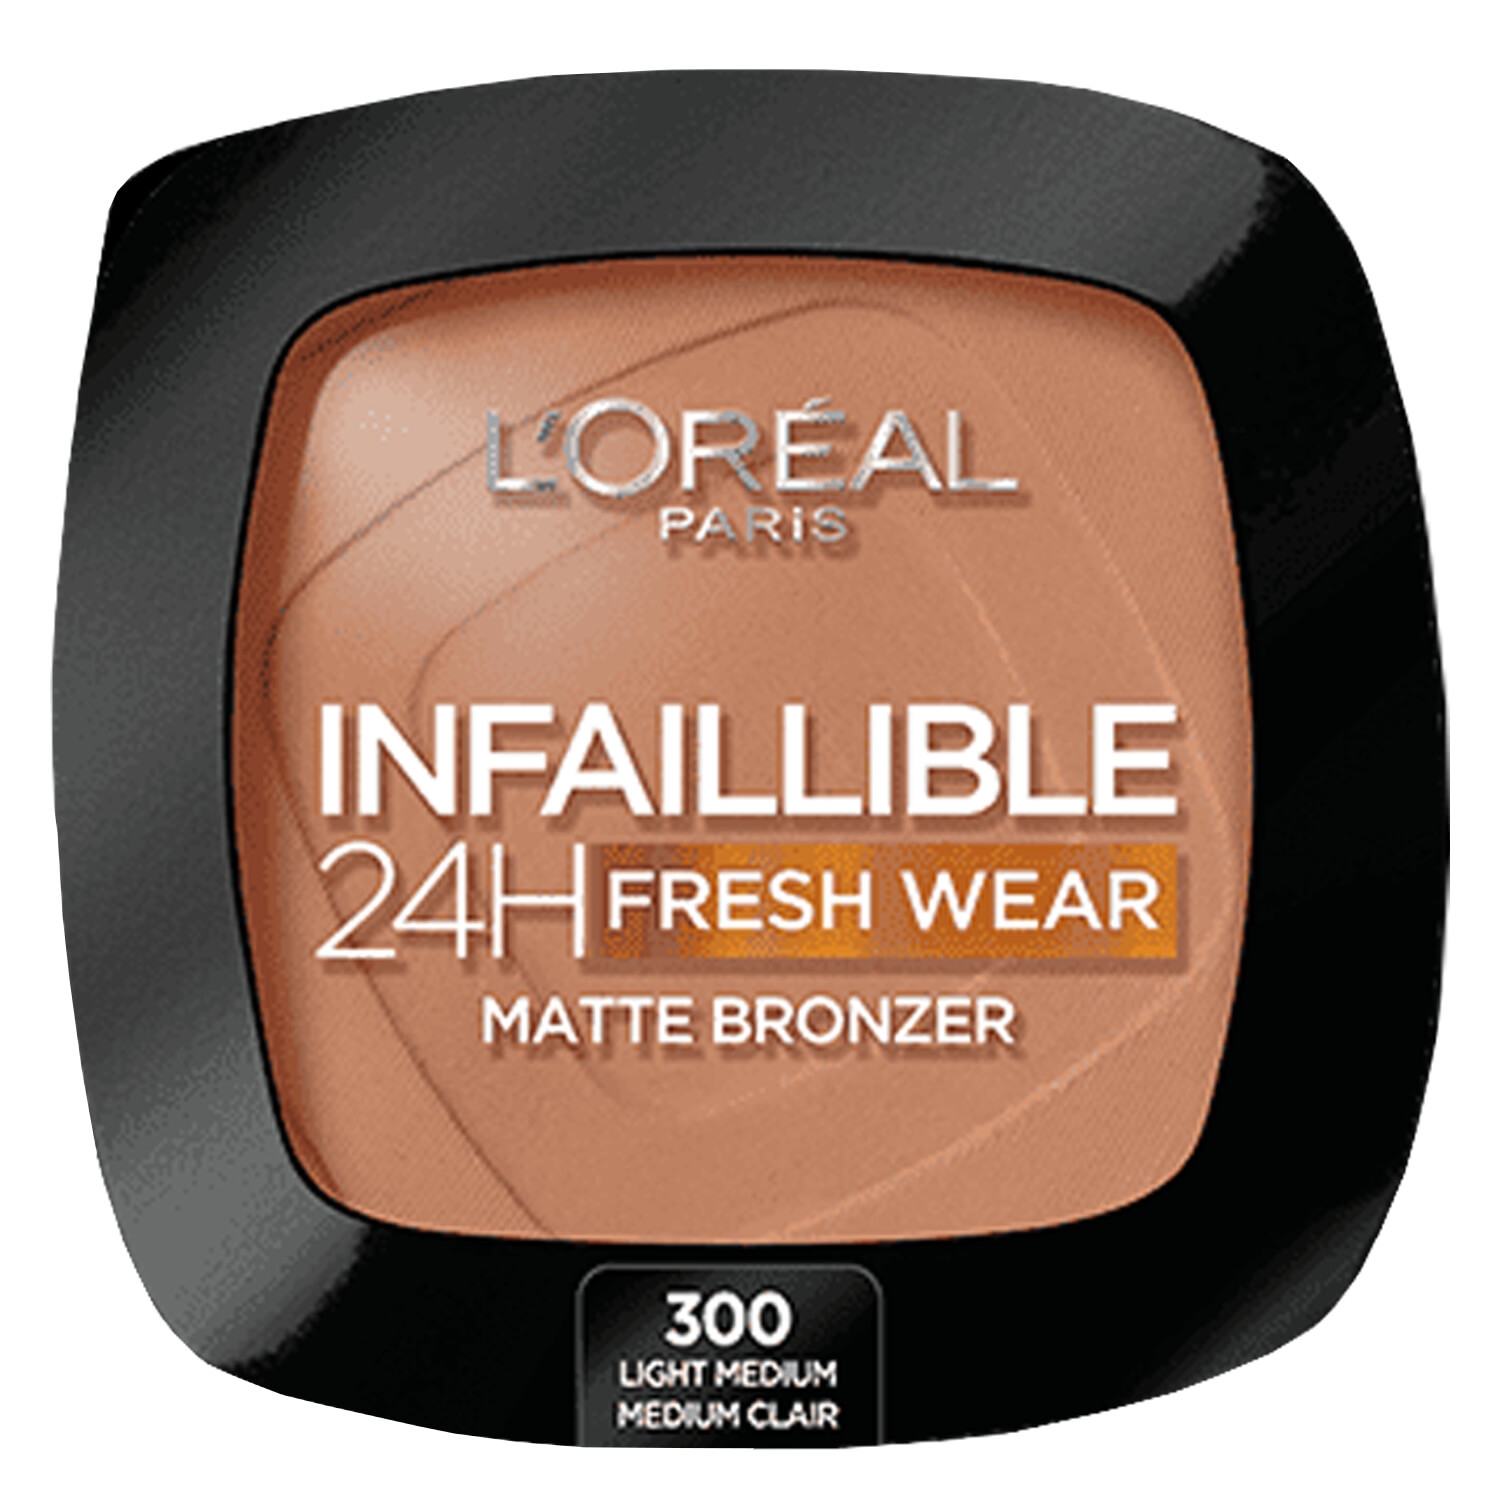 Product image from LOréal Infaillible - 24H Fresh Wear Matte Bronzer 300 Light Medium